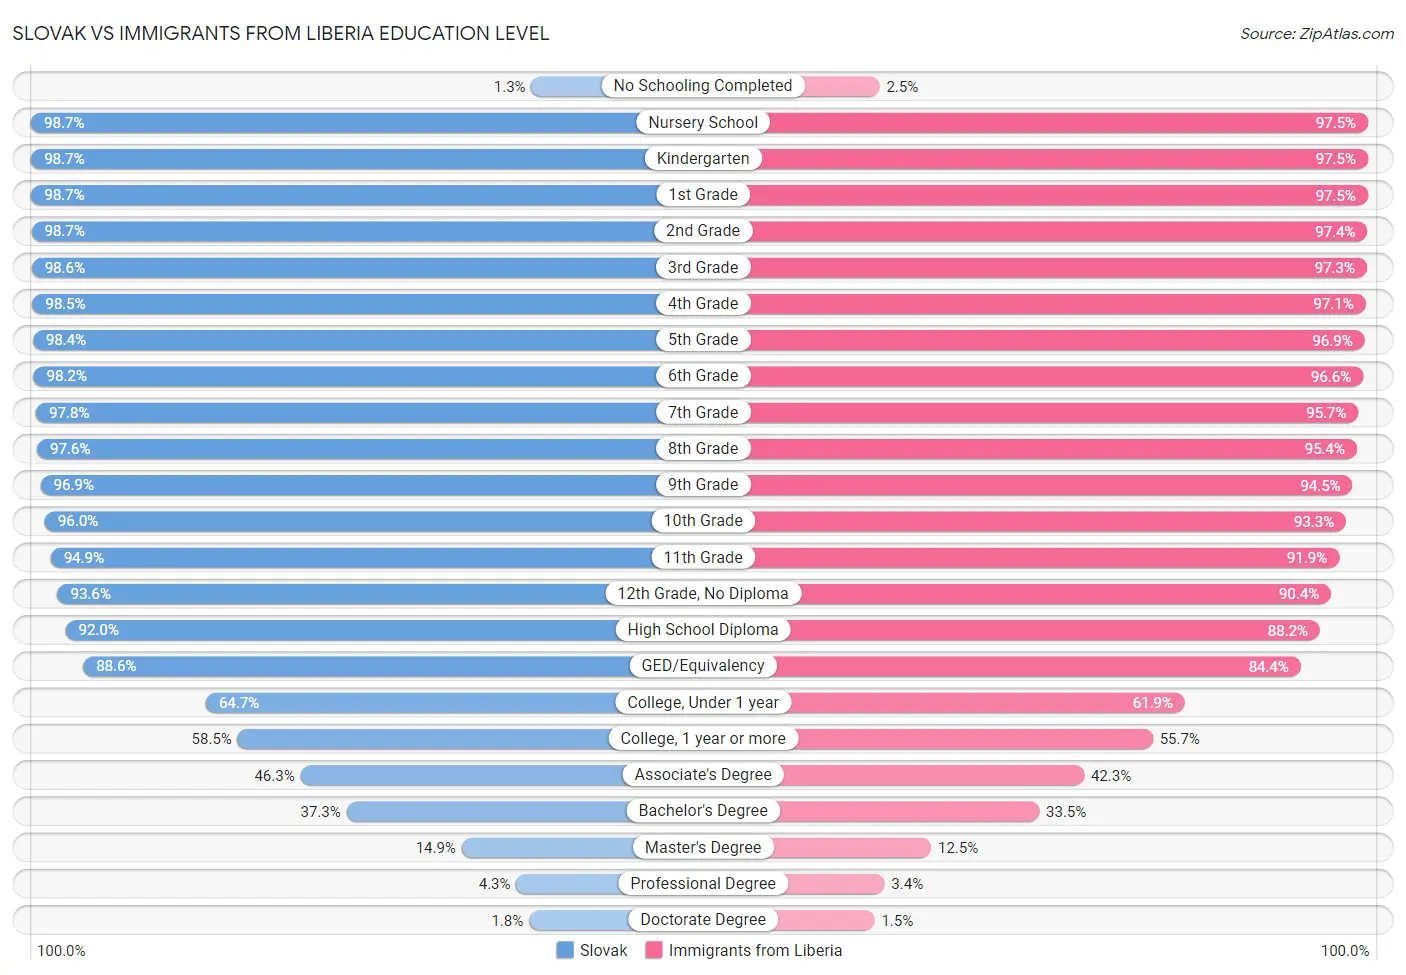 Slovak vs Immigrants from Liberia Education Level